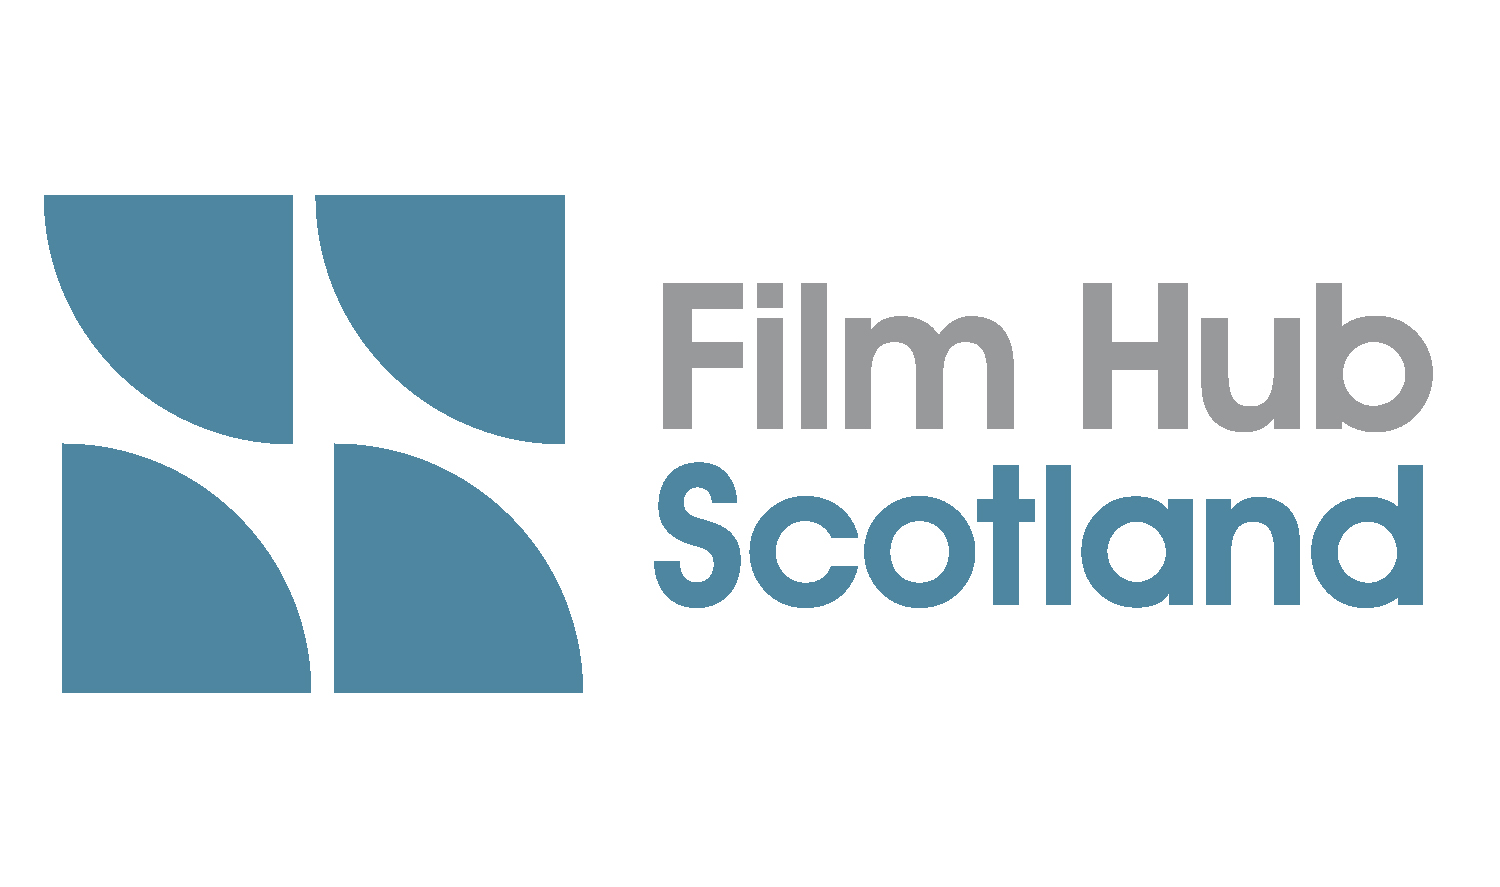 Film Hub Scotland logo